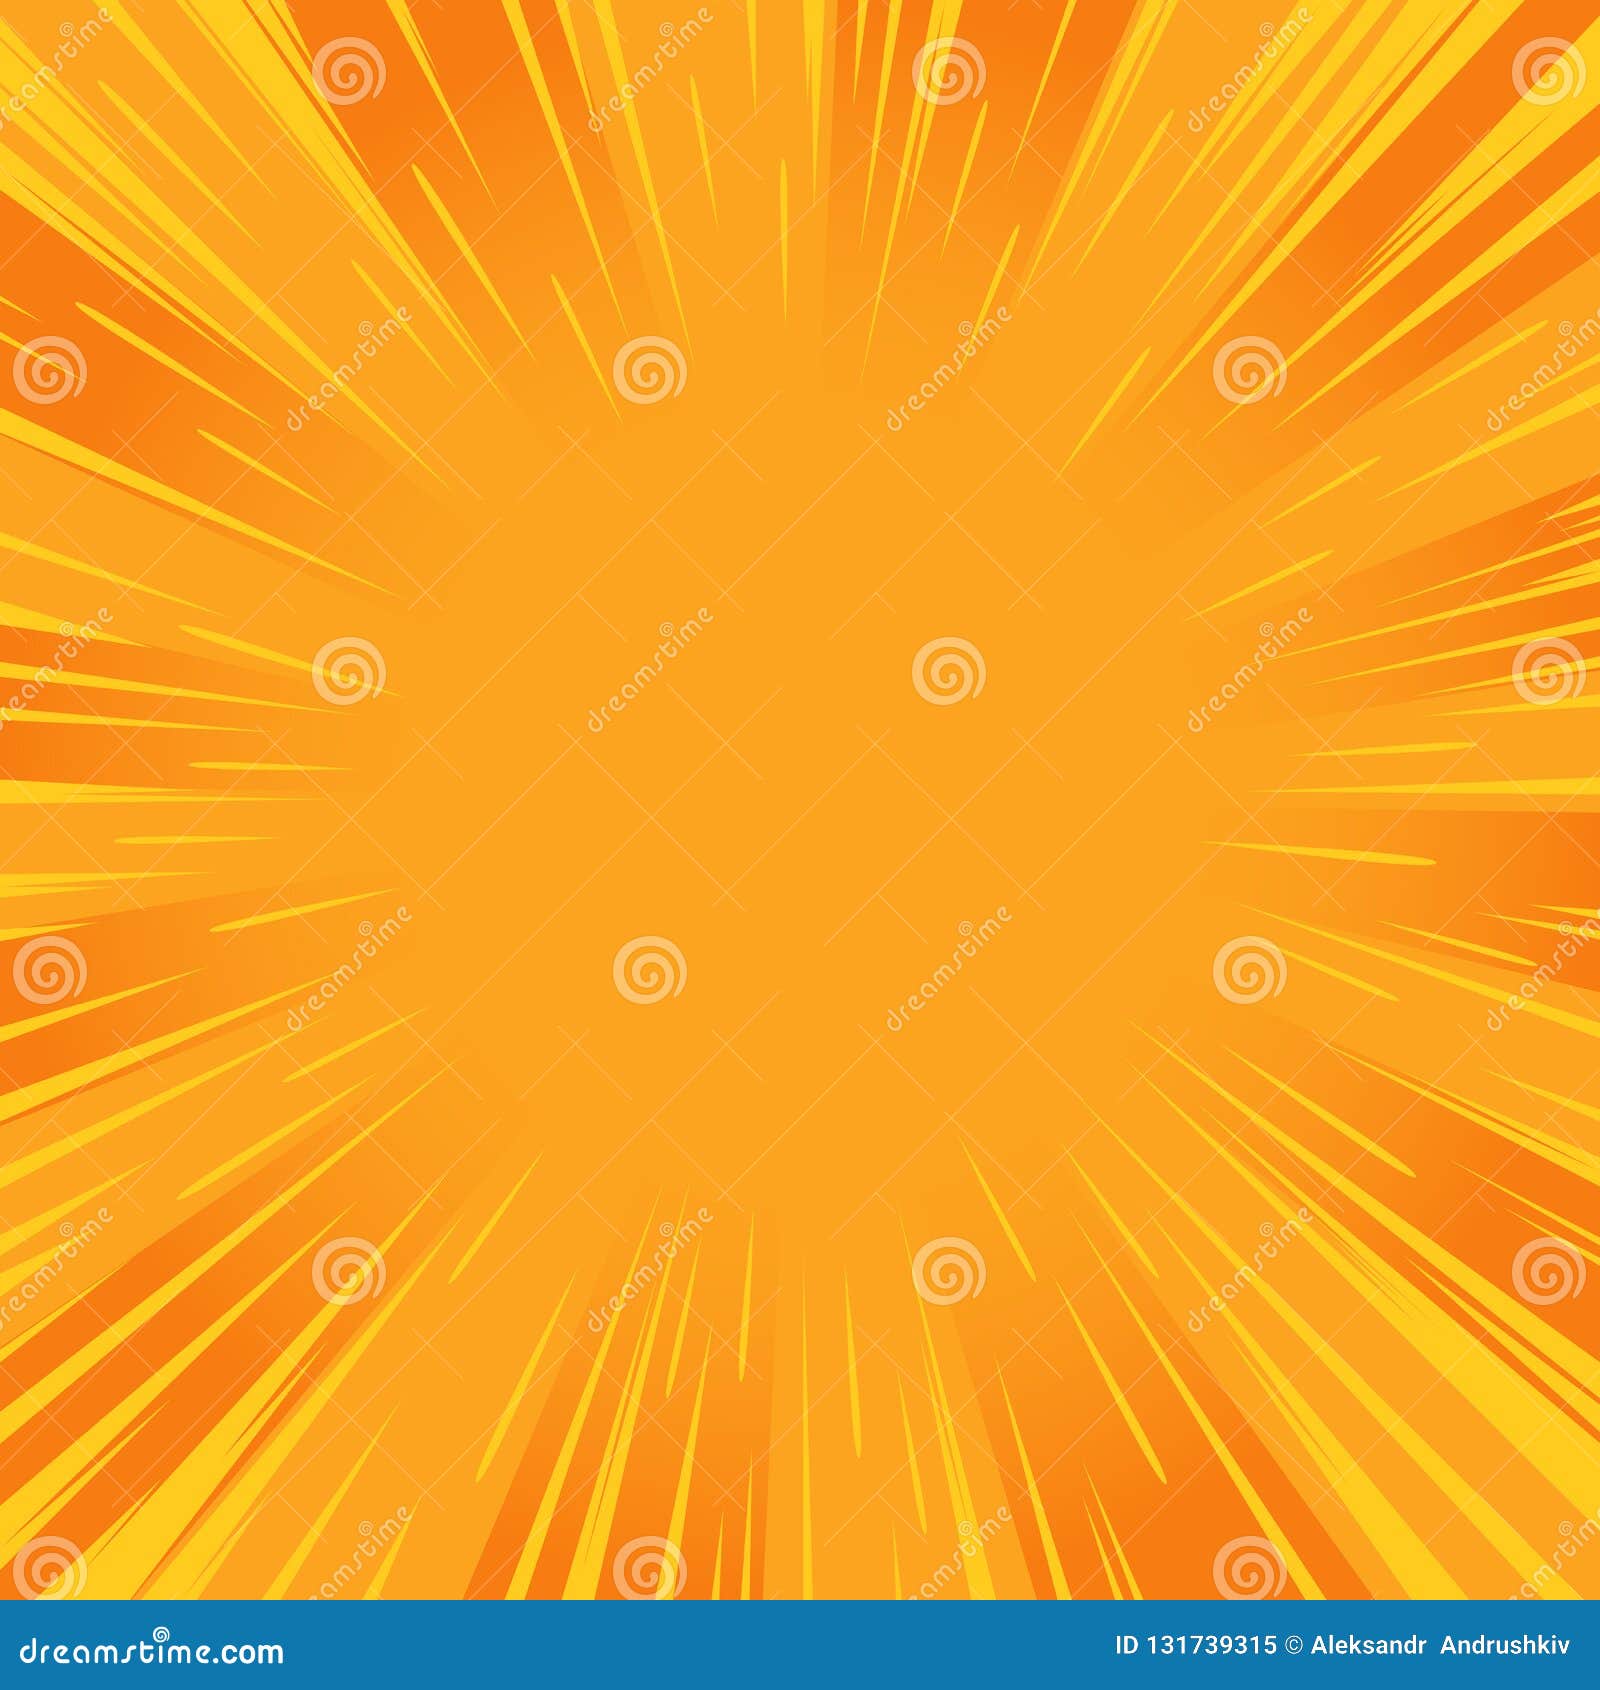  Orange speed lines  3 stock vector Illustration of 